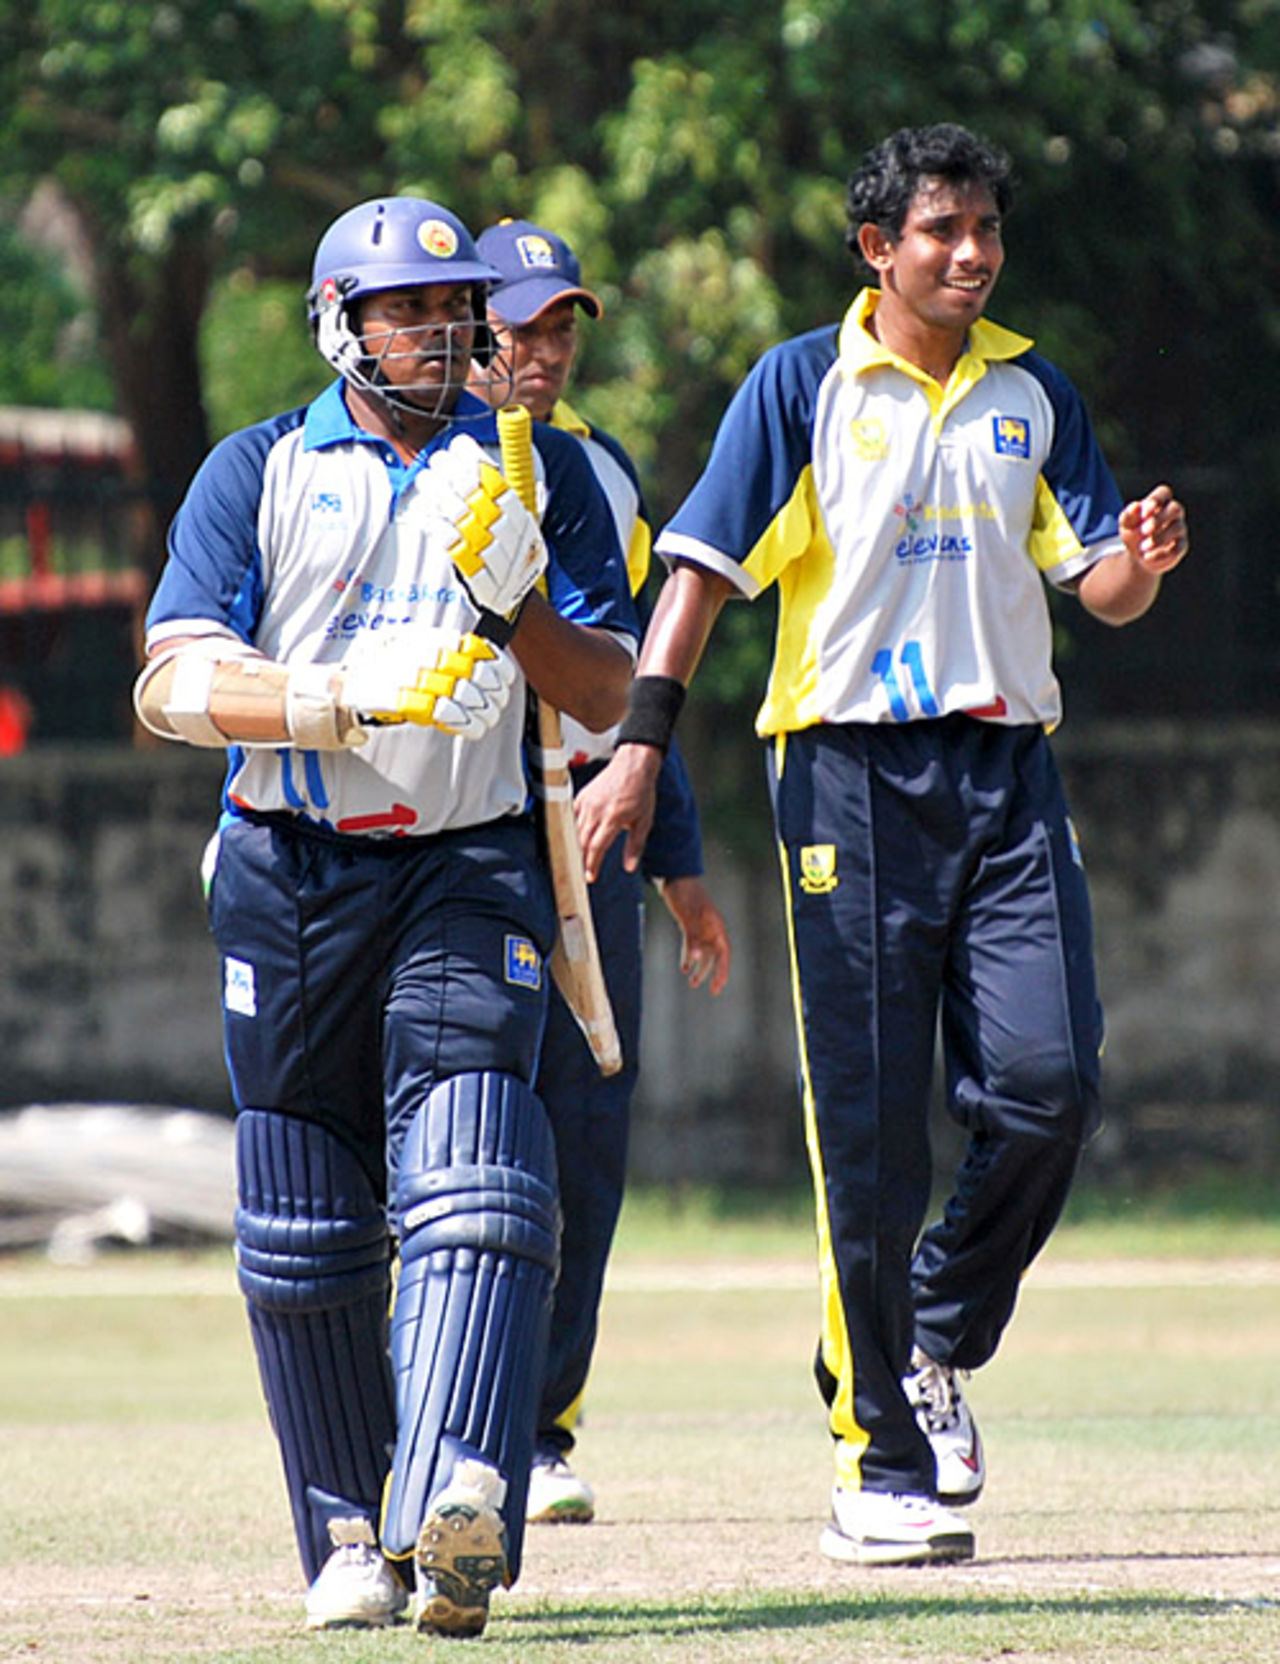 Thilina Kandamby was dismissed by Thilan Thushara, Basnahira North v Kandurata, Sri Lanka Cricket Inter-Provincial Limited Over Tournament, Colombo, February 6, 2010